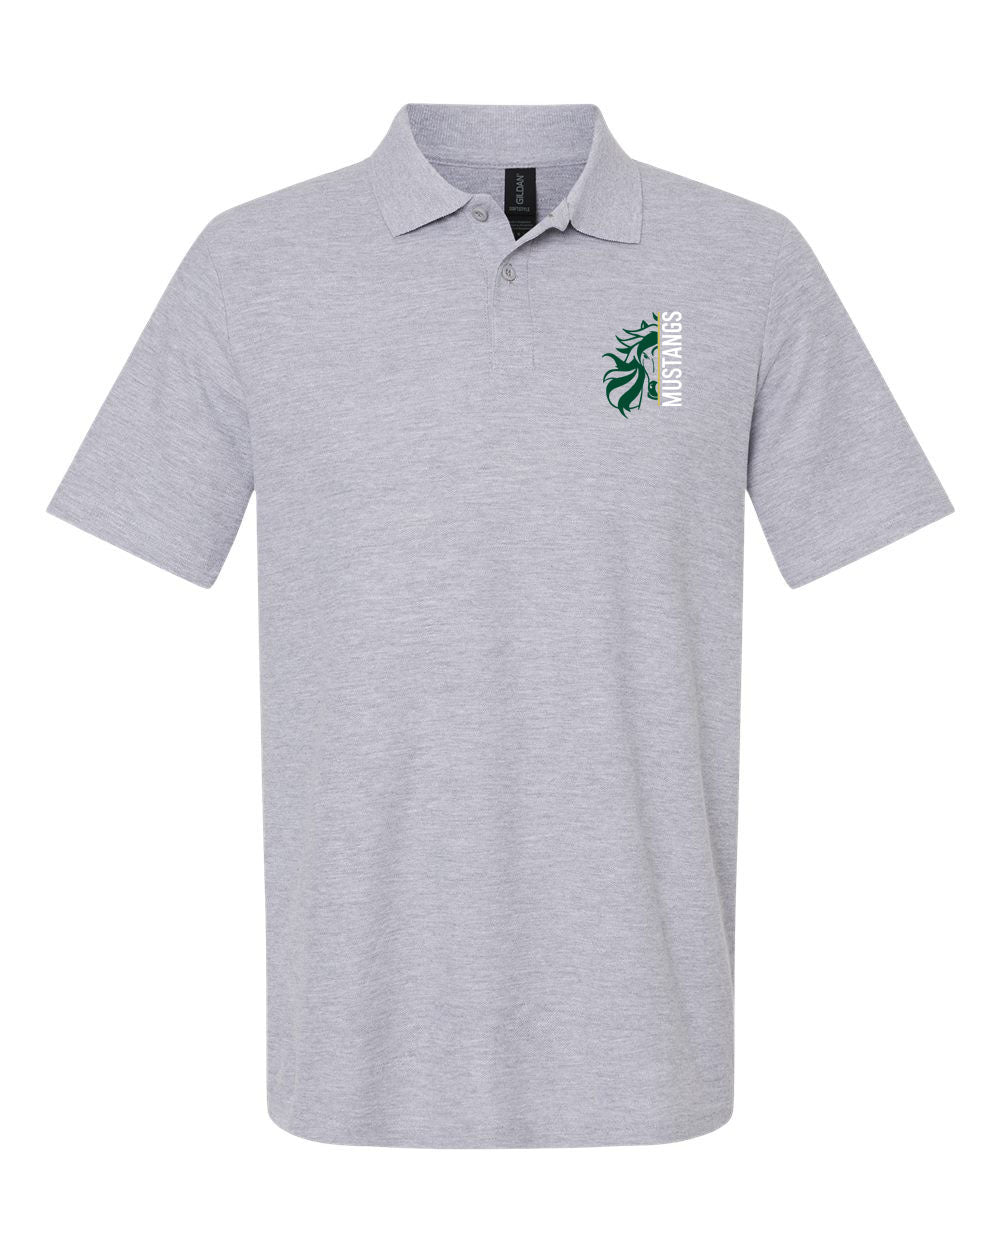 Green hills design 11 Polo T-Shirt